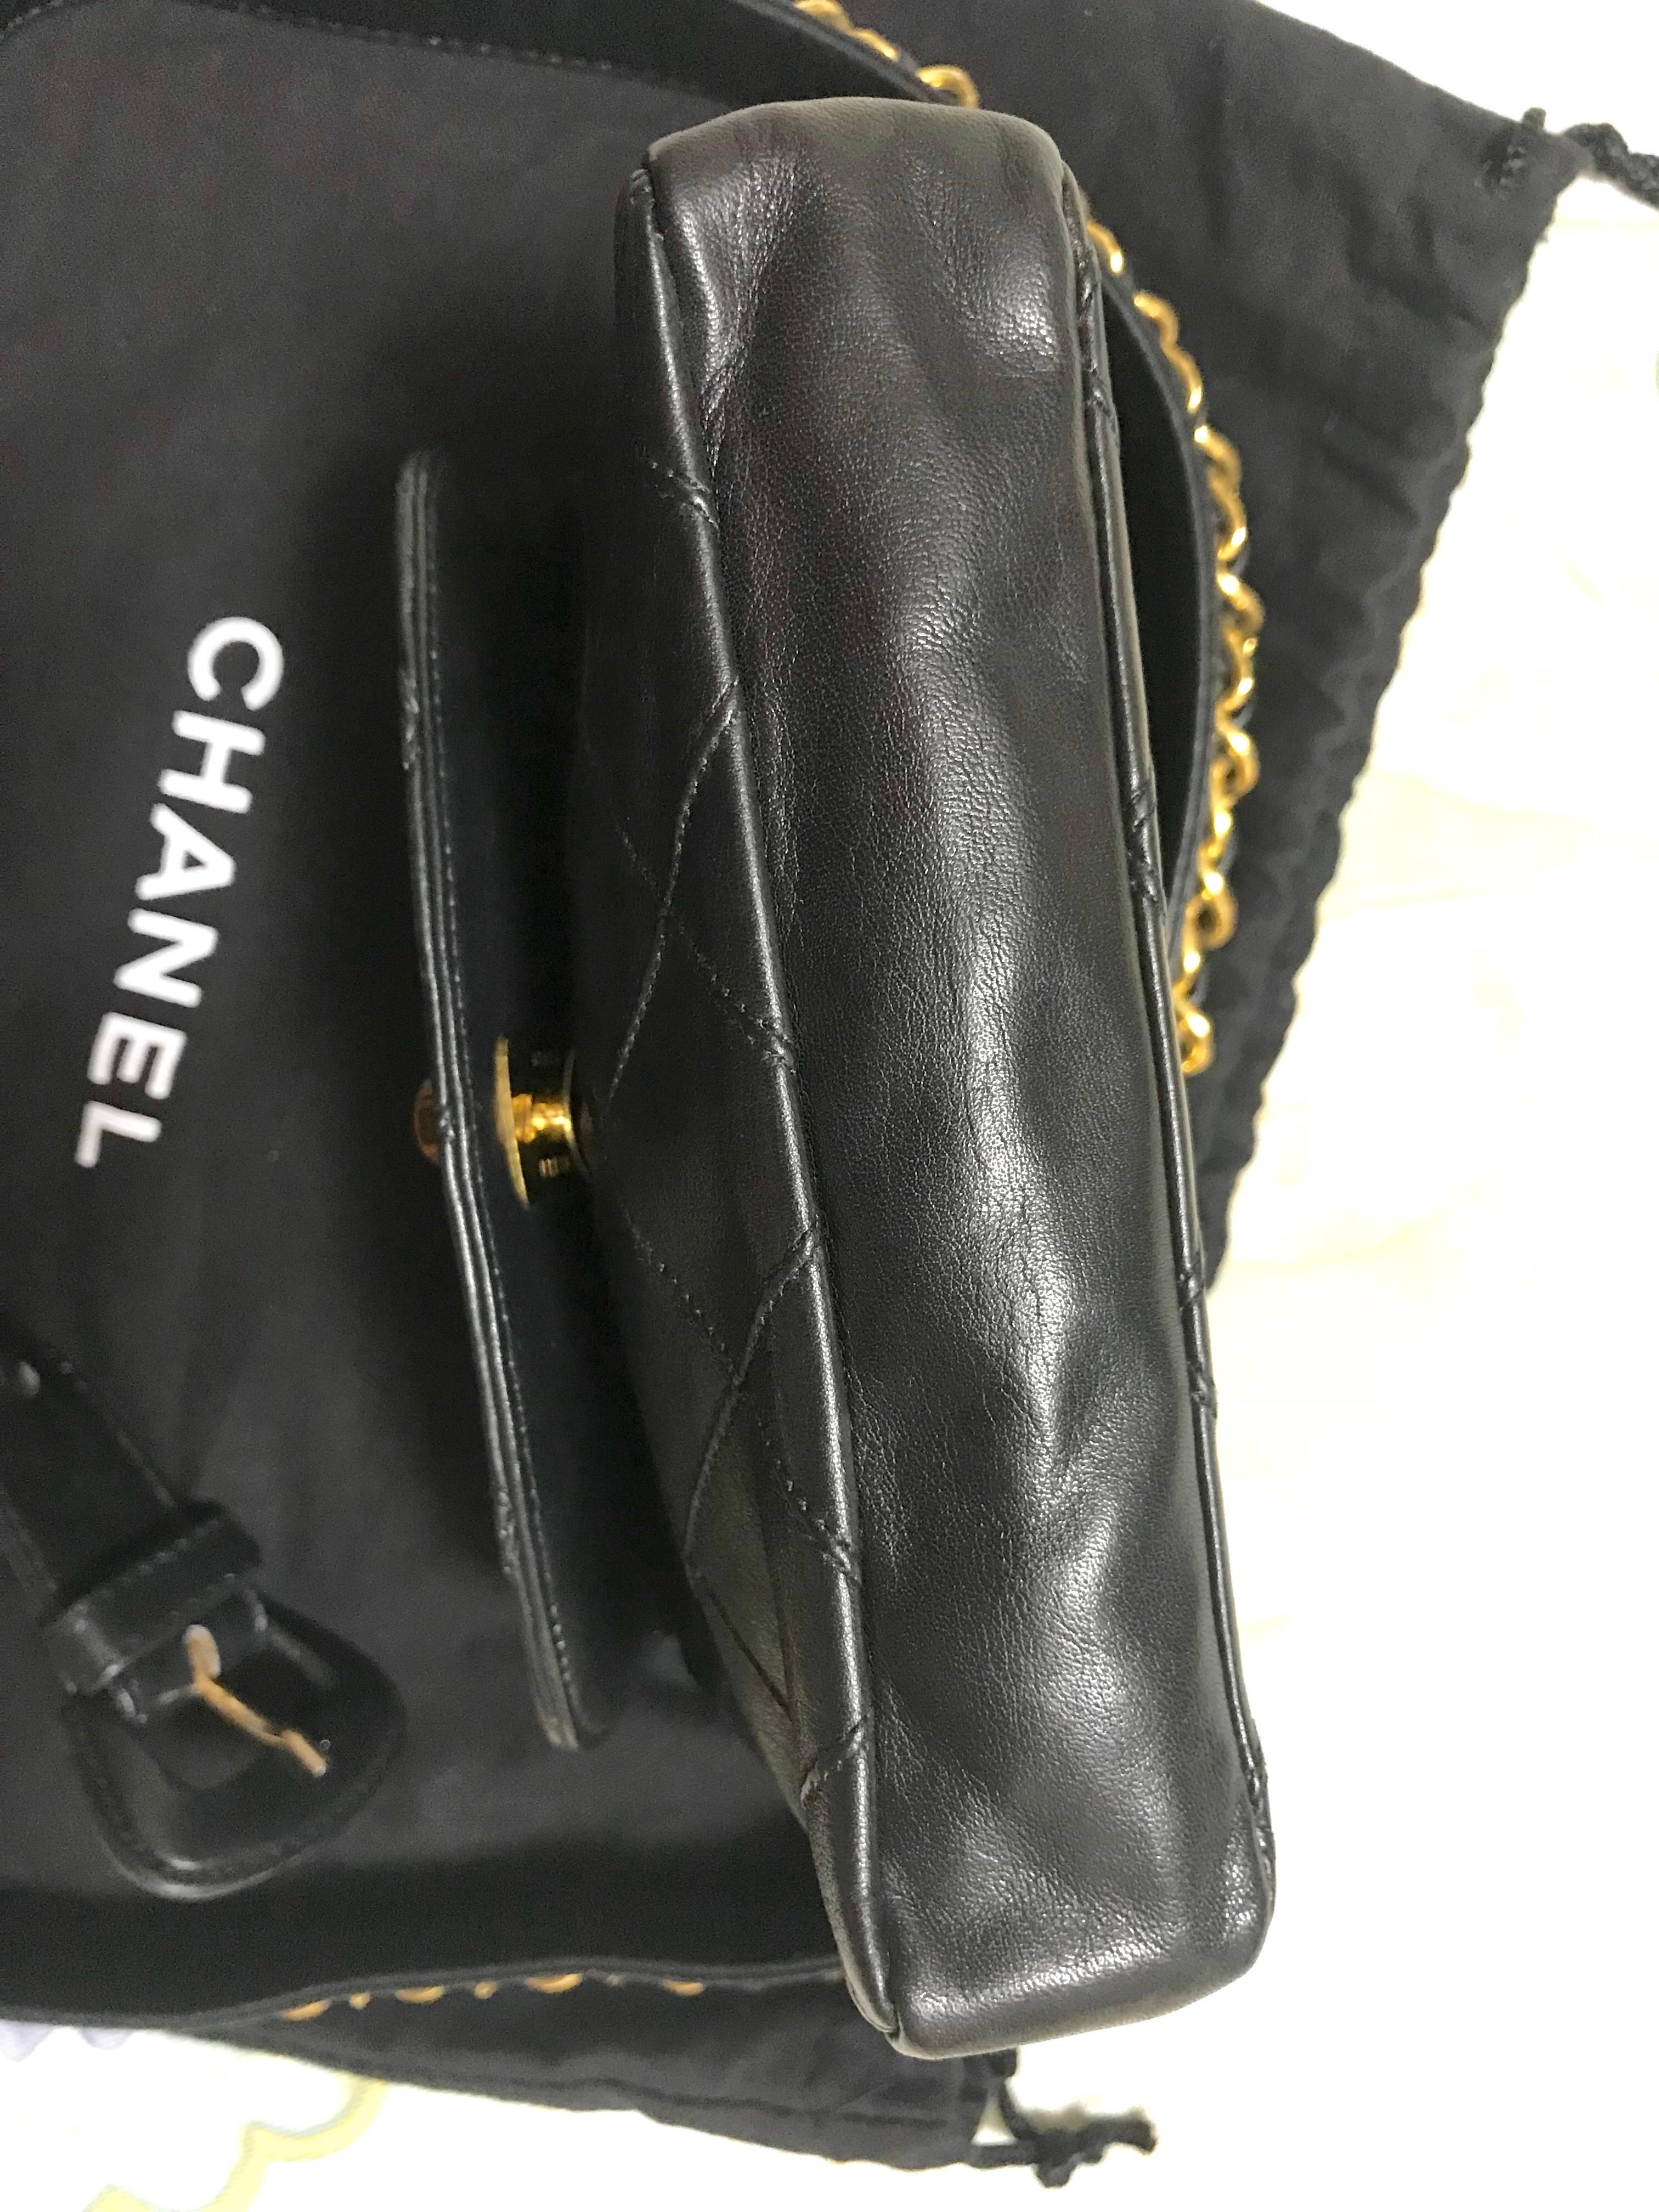 Vintage CHANEL black leather waist purse, fanny pack, hip bag with golden CC. 2